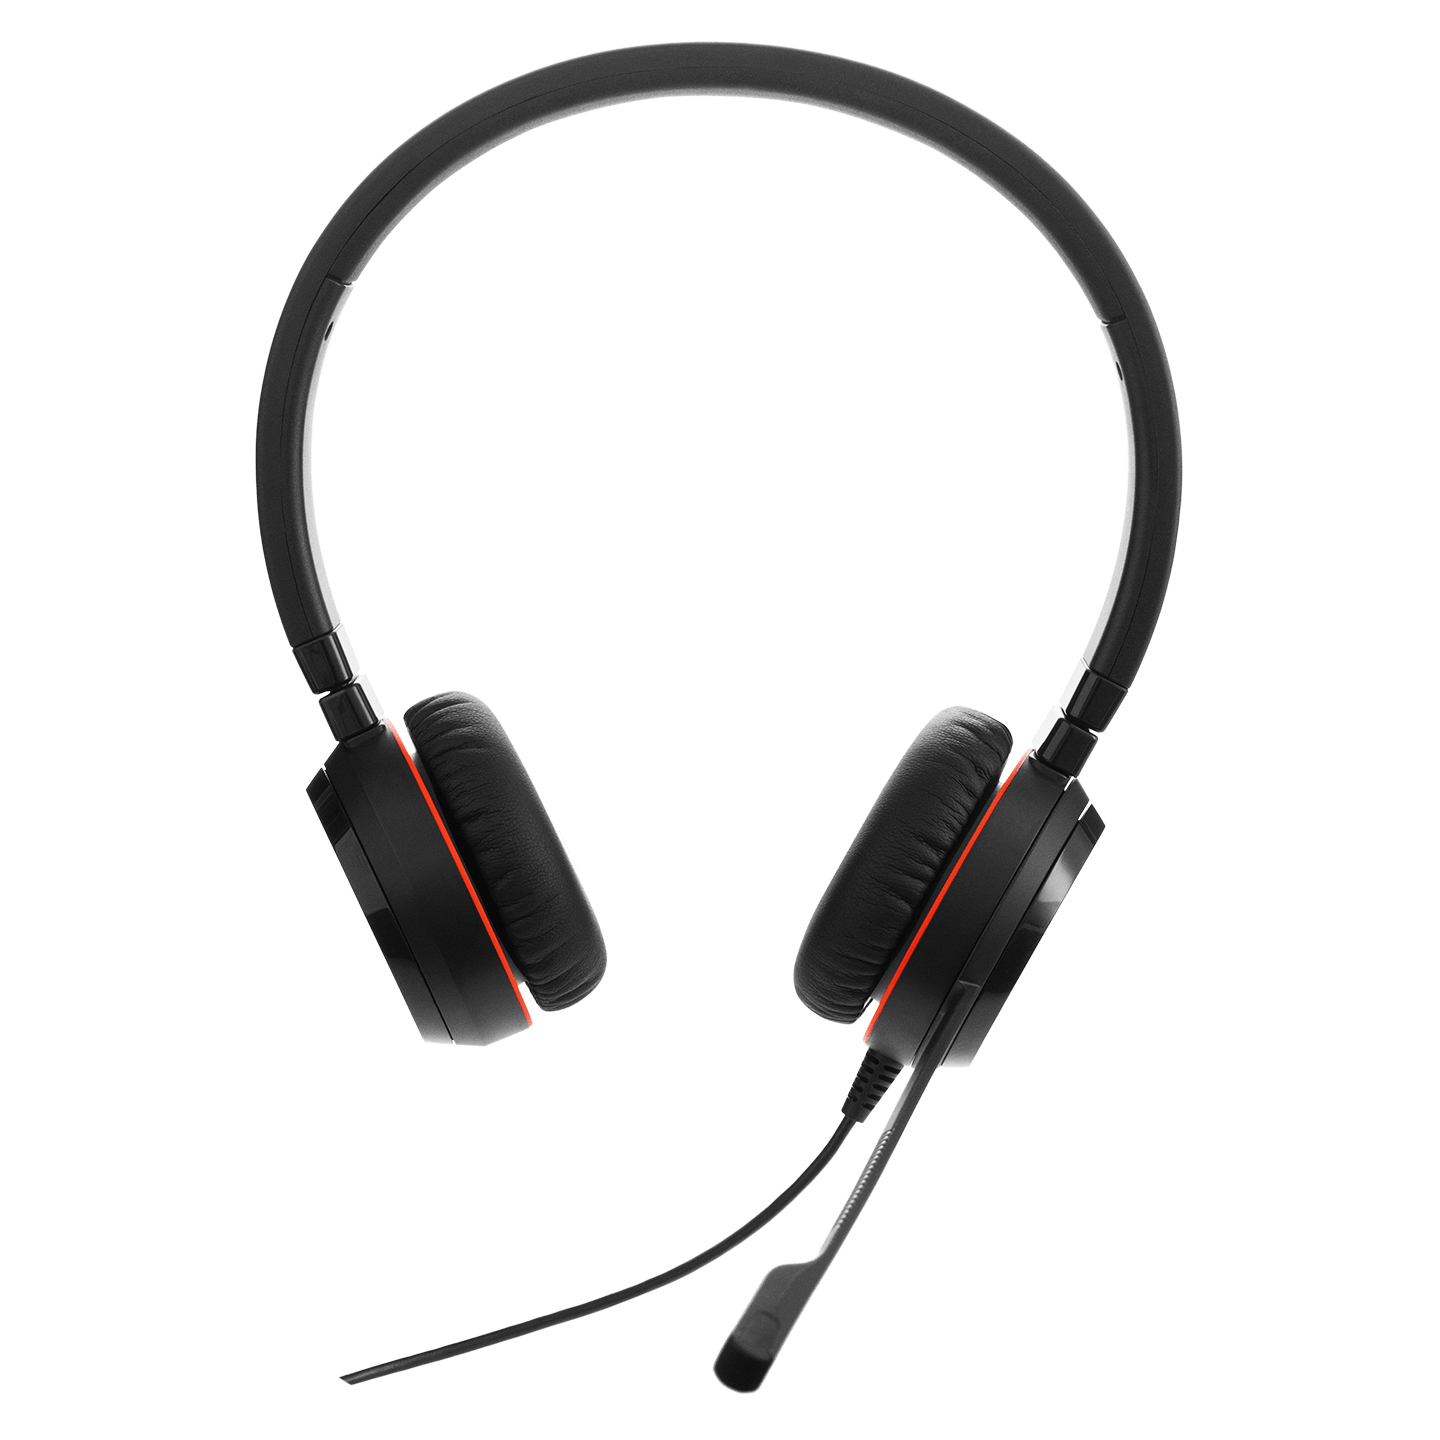 Jabra Evolve 20SE MS Stereo Headset Head-band Black